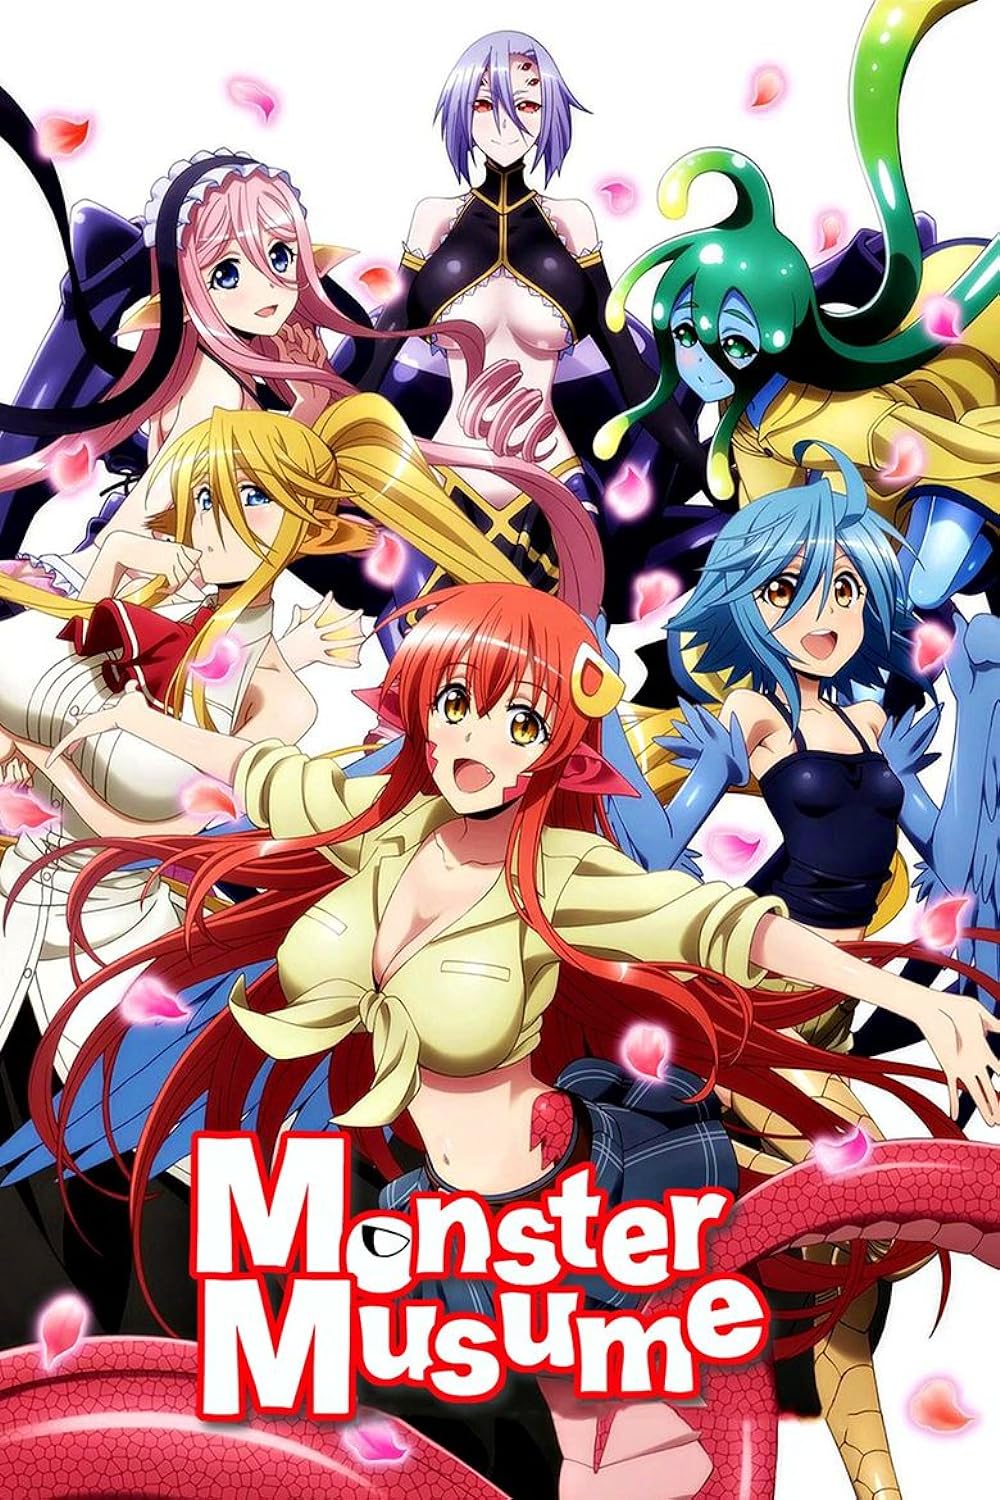 Monster Musume Ep 1 Uncensored teens wmv